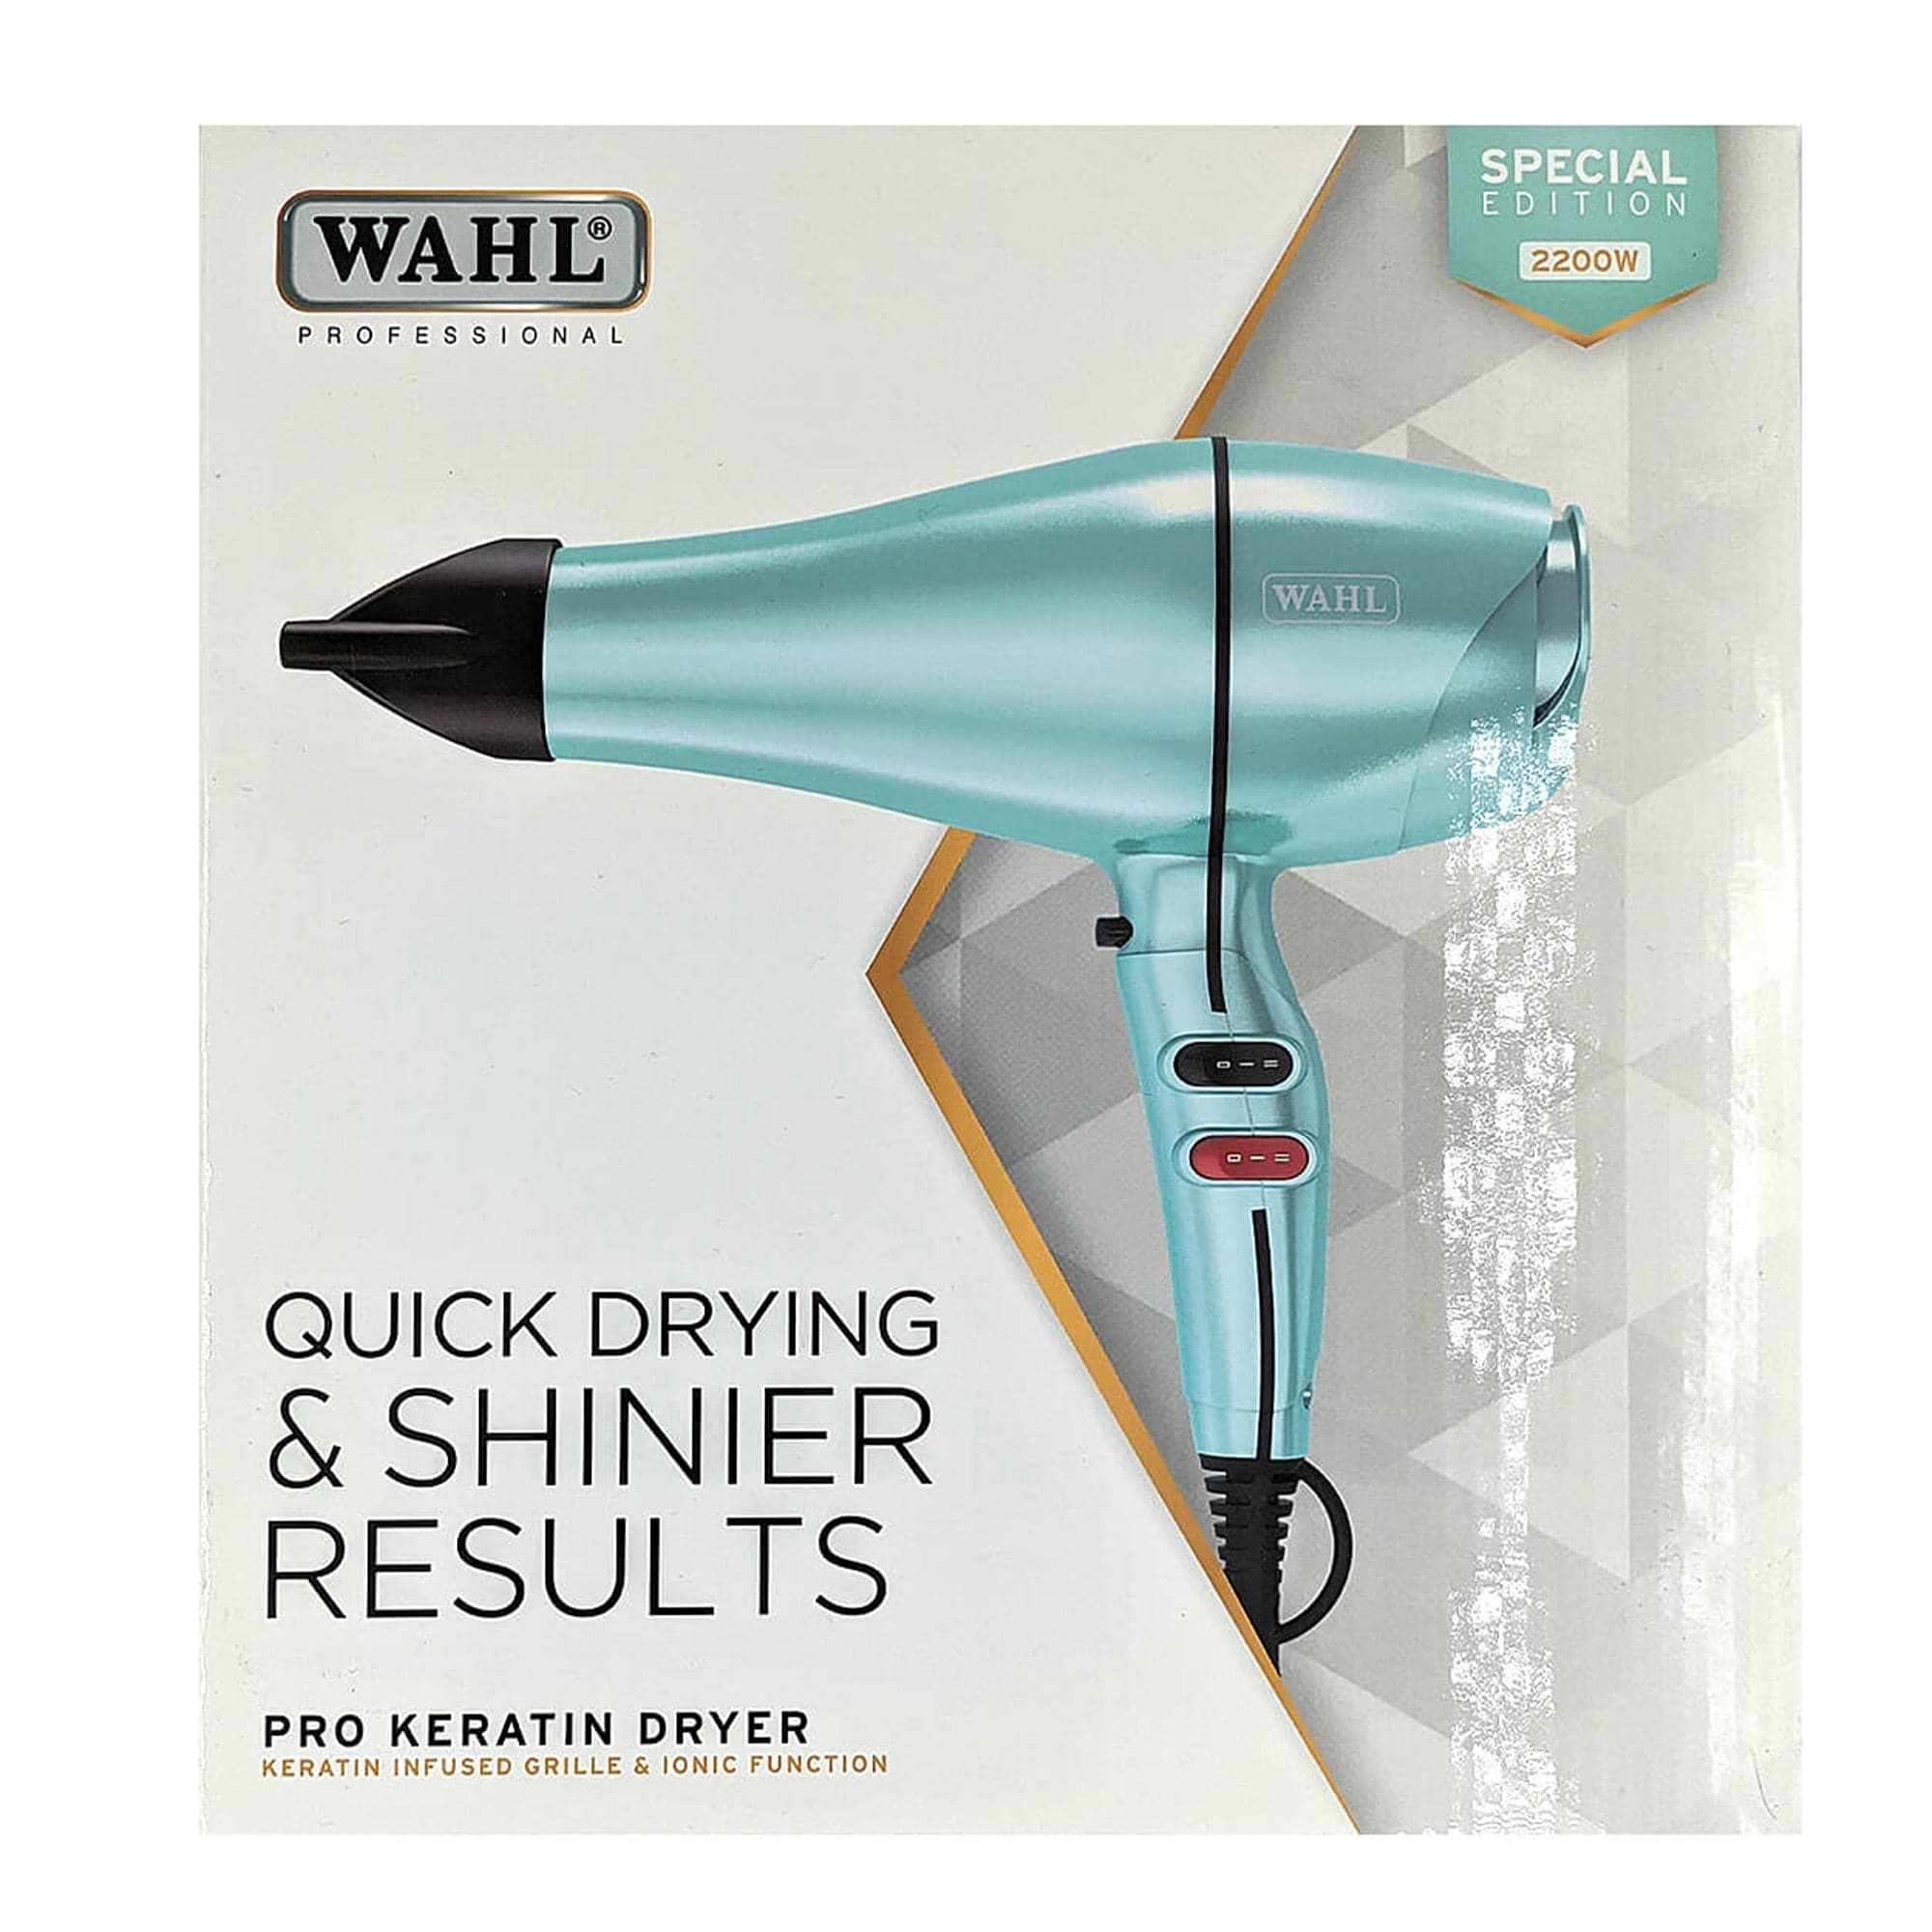 Wahl - Pro Keratin Dryer Spearmint Special Edition 2200W